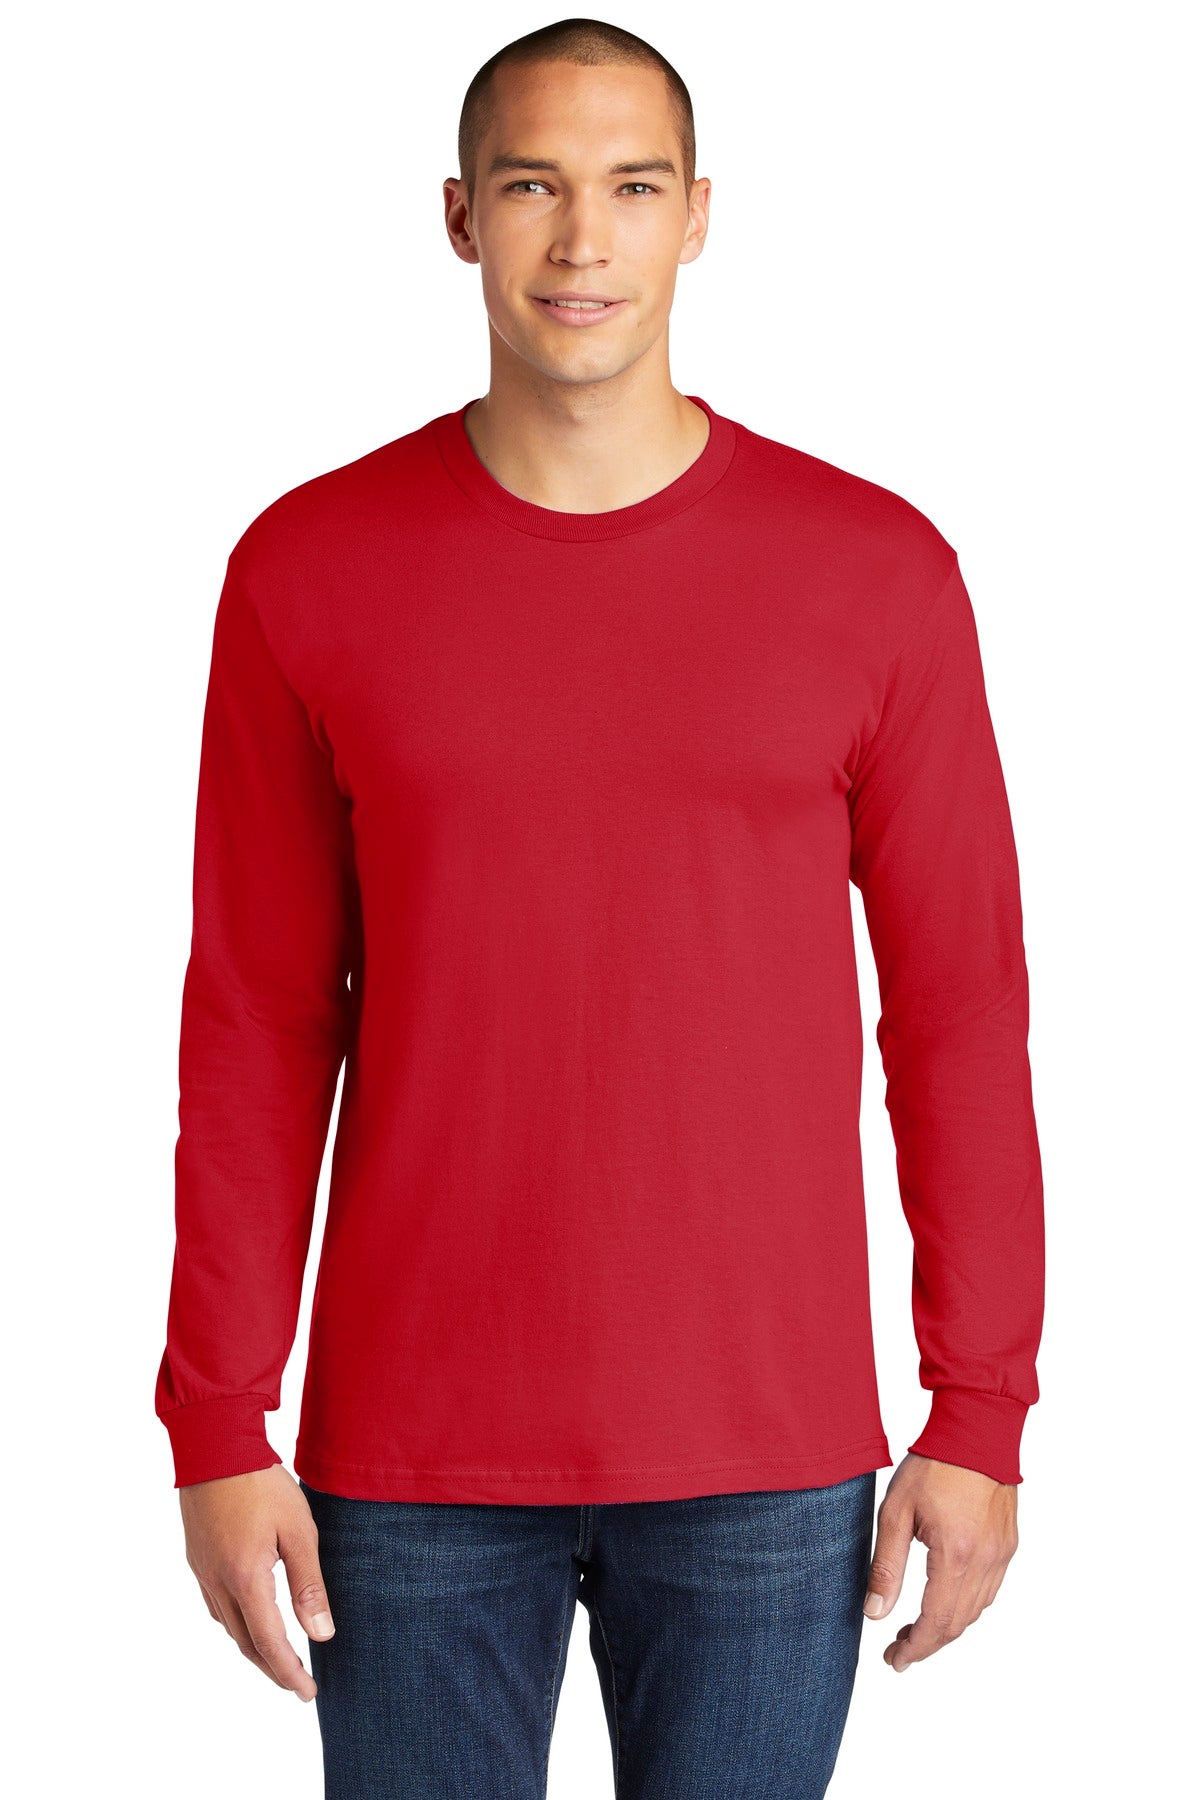 Gildan Hammer ™ Long Sleeve T-Shirt. H400 - DFW Impression